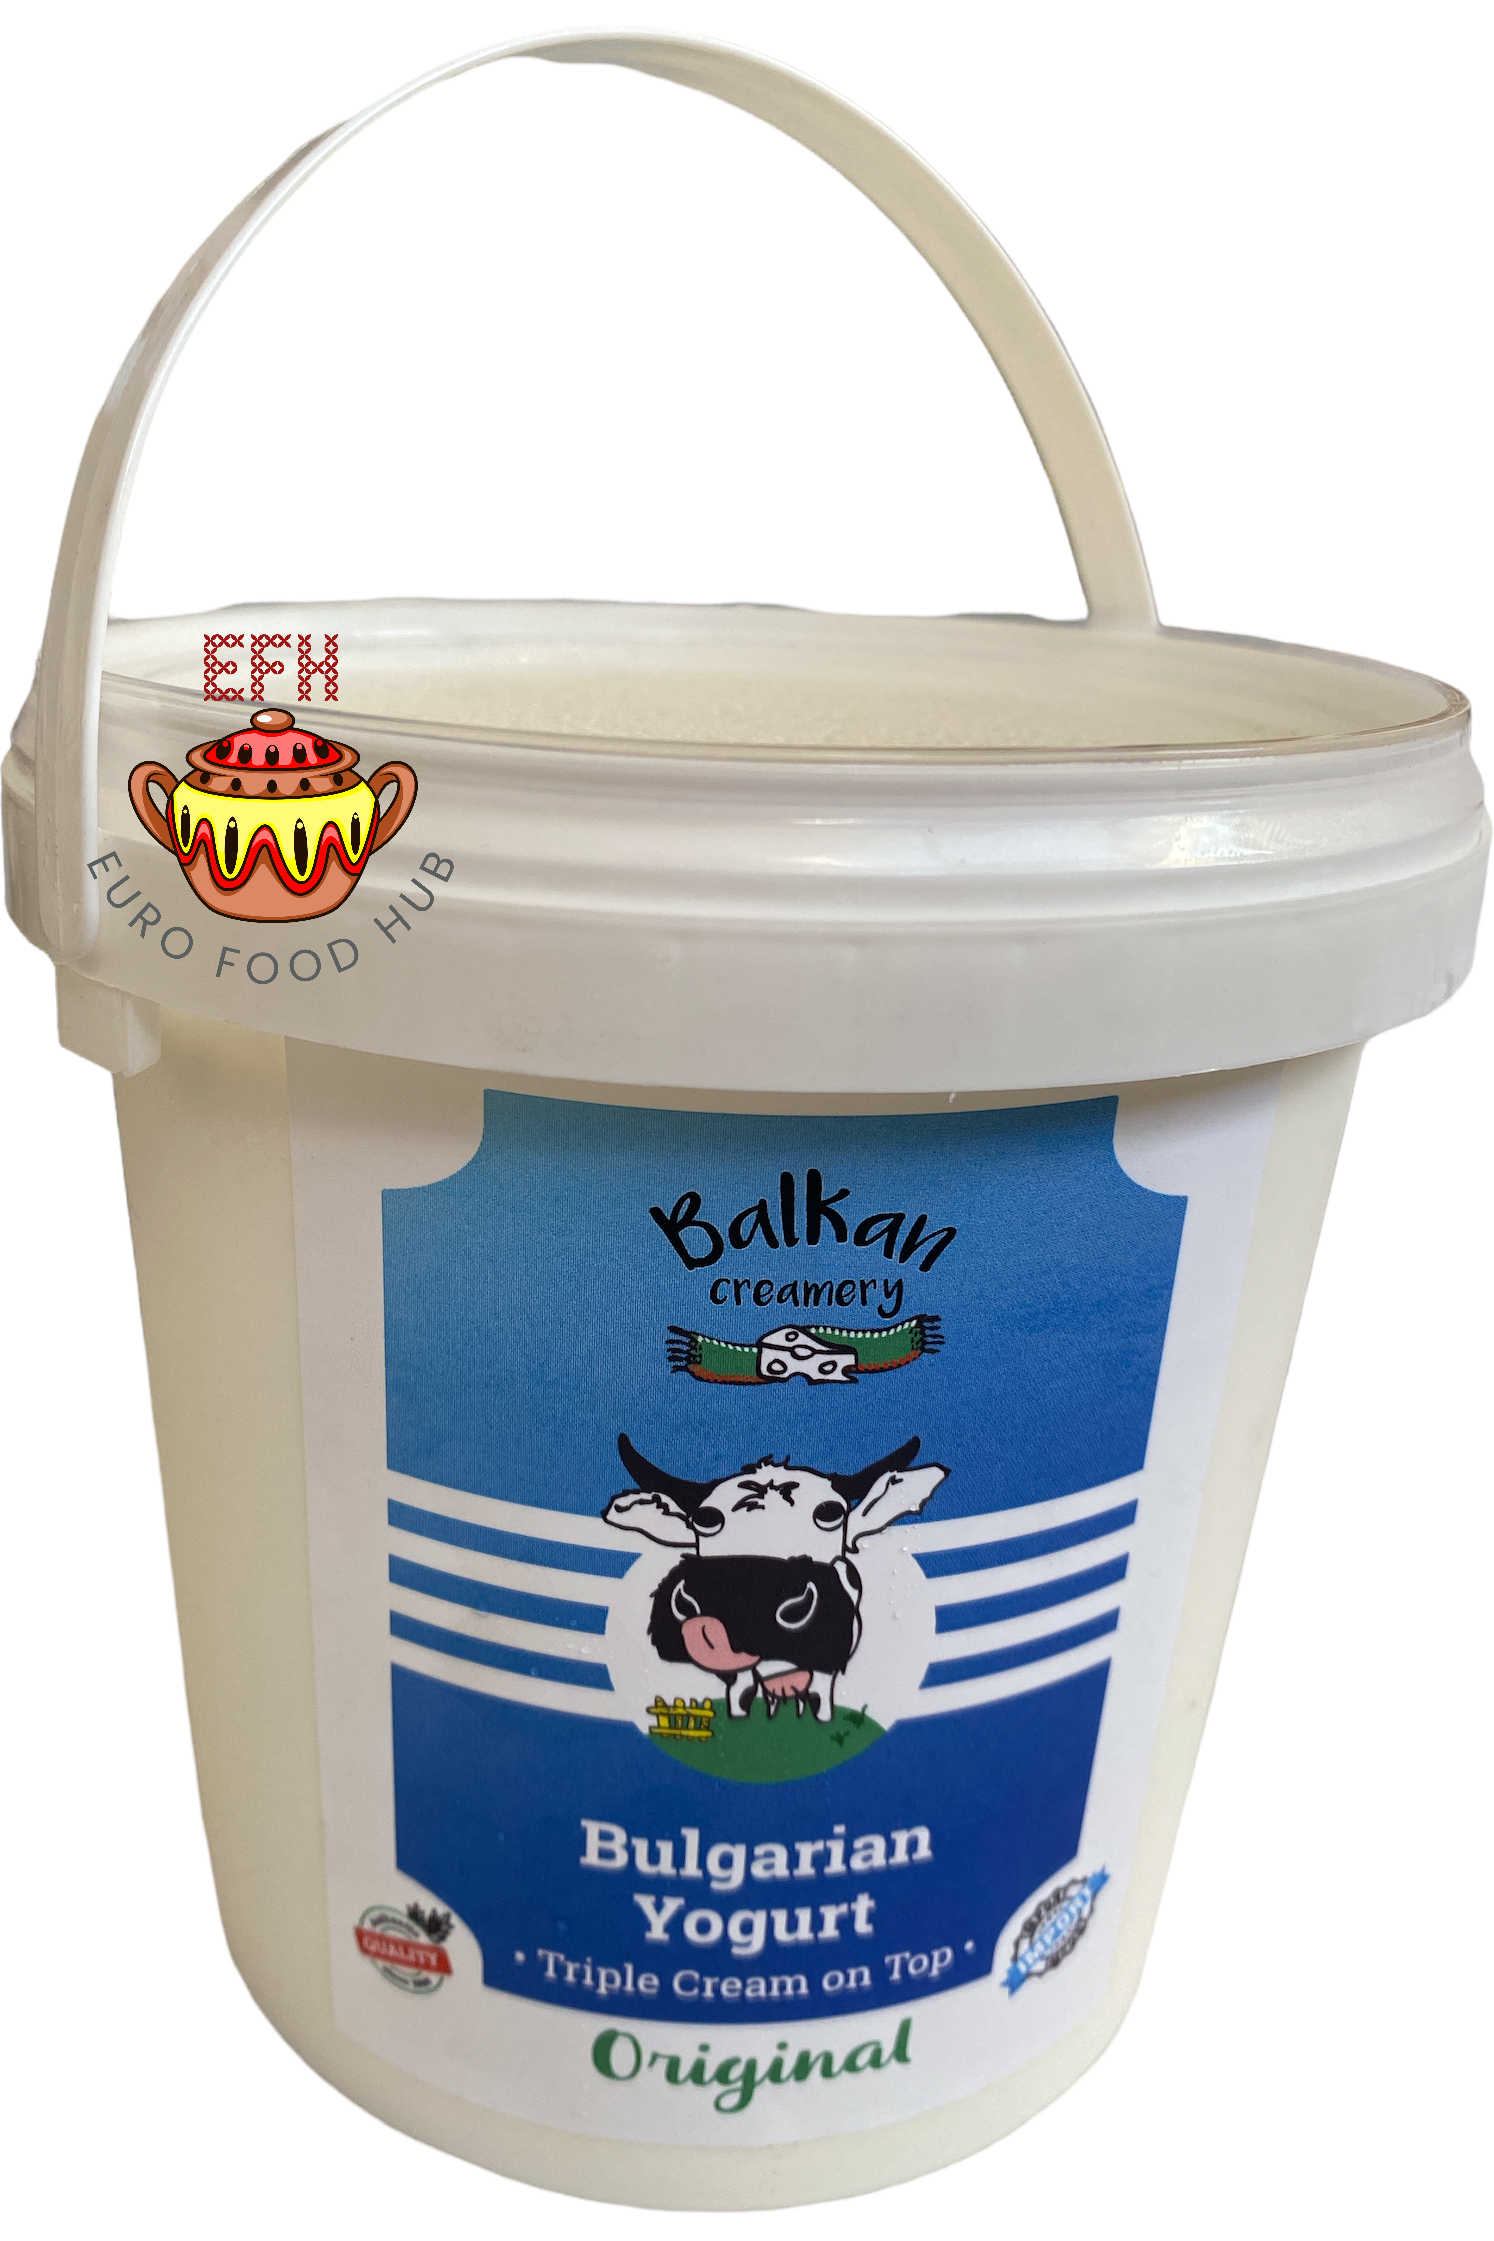 Bulgarian Yogurt - Rodopsko Chudo by Balkan Creamery - Imported!